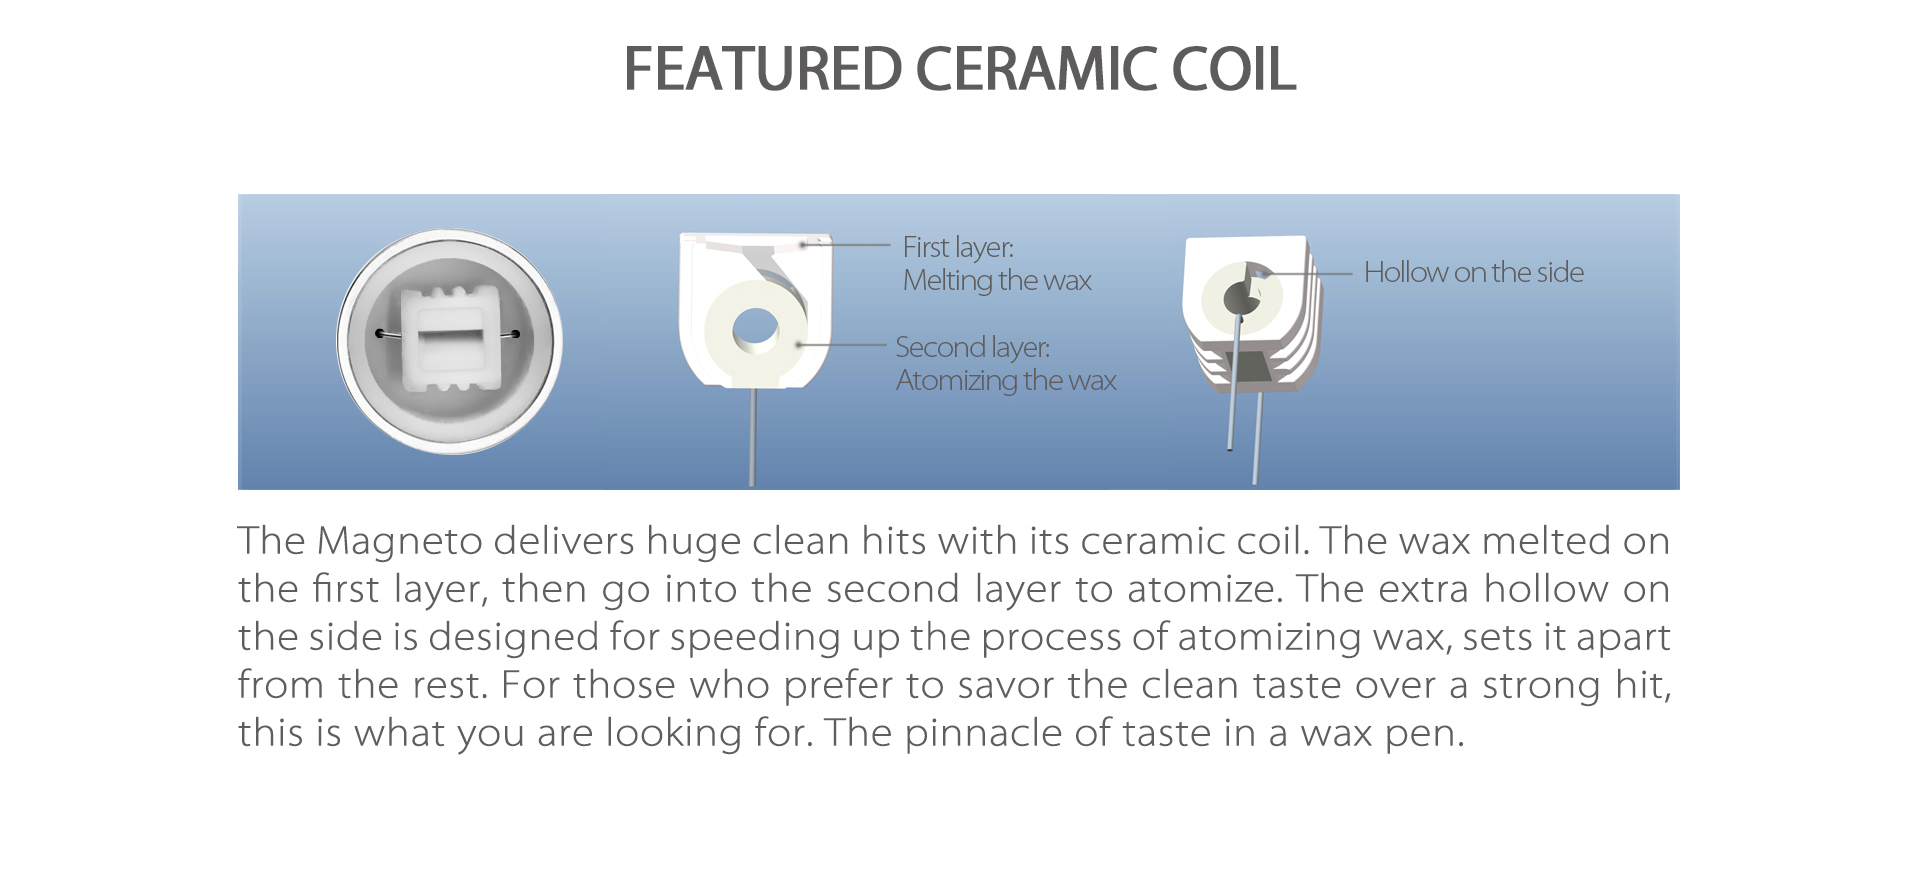 Yocan Magneto concentrate vaporizer pen 2020 version features Ceramic Coils